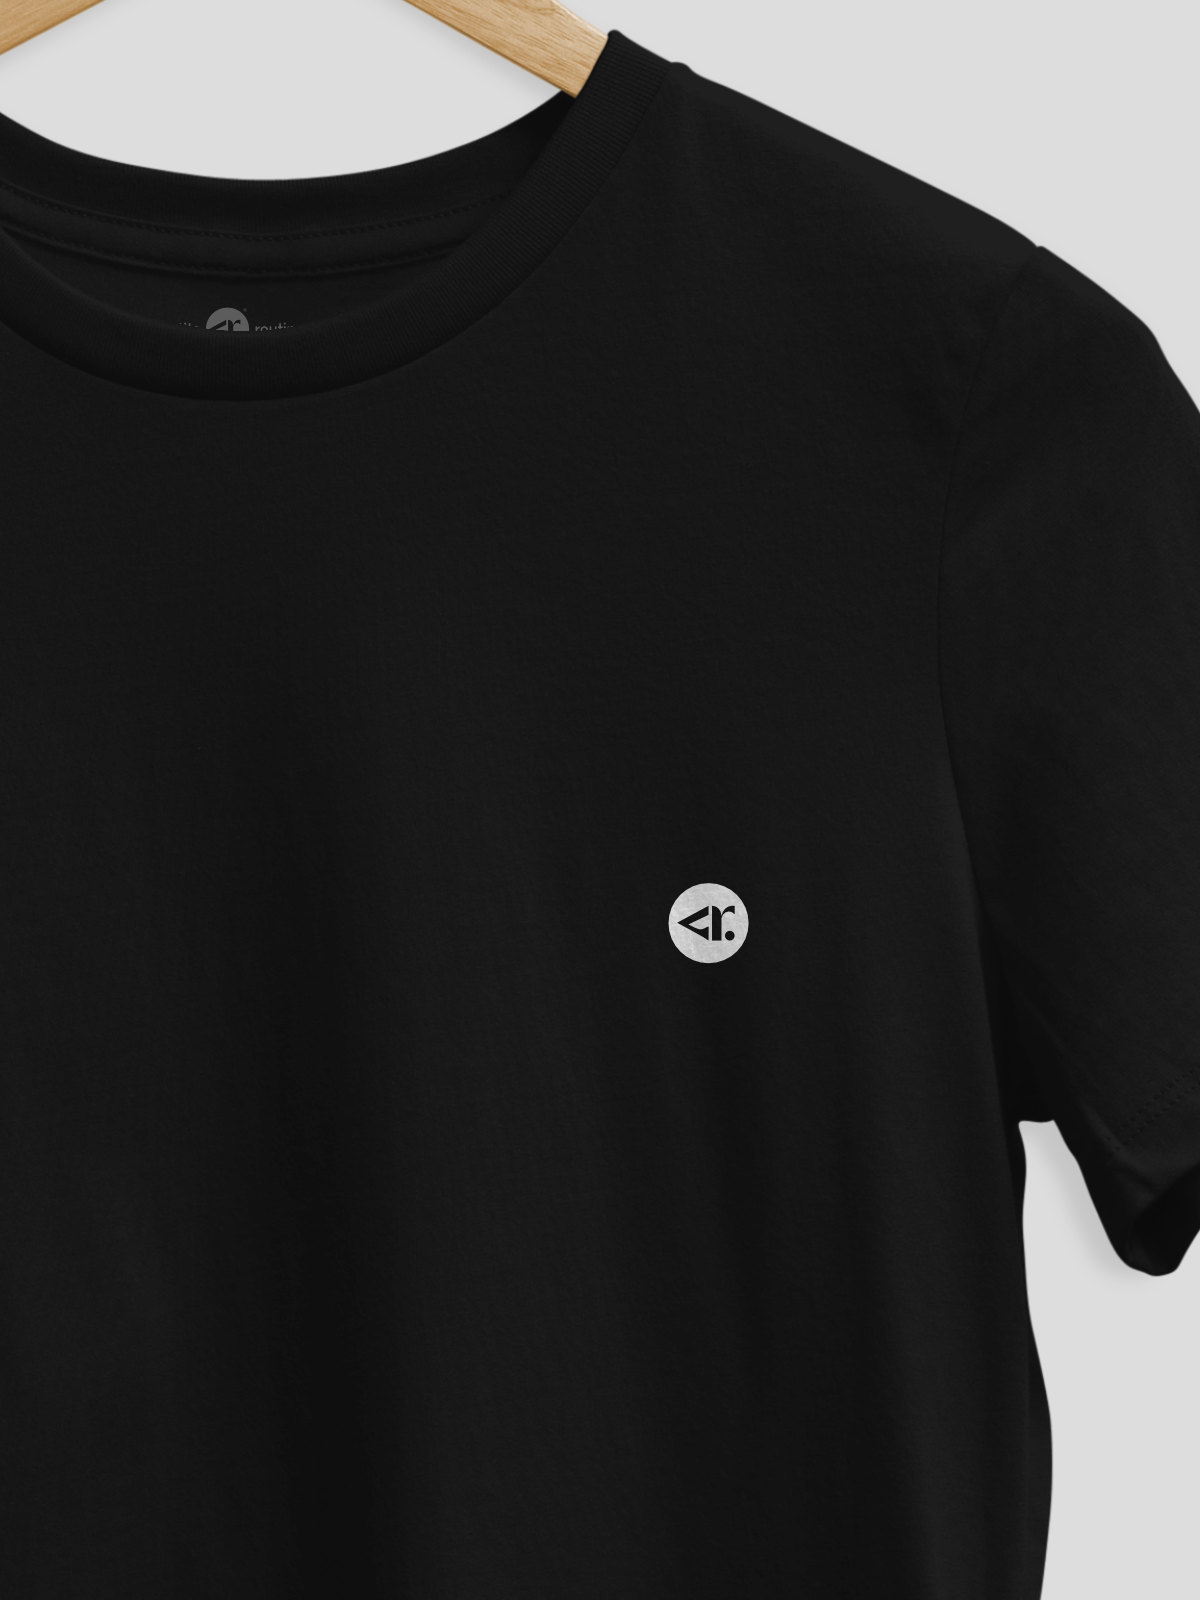 T-shirt - Black 100% Organic Cotton.